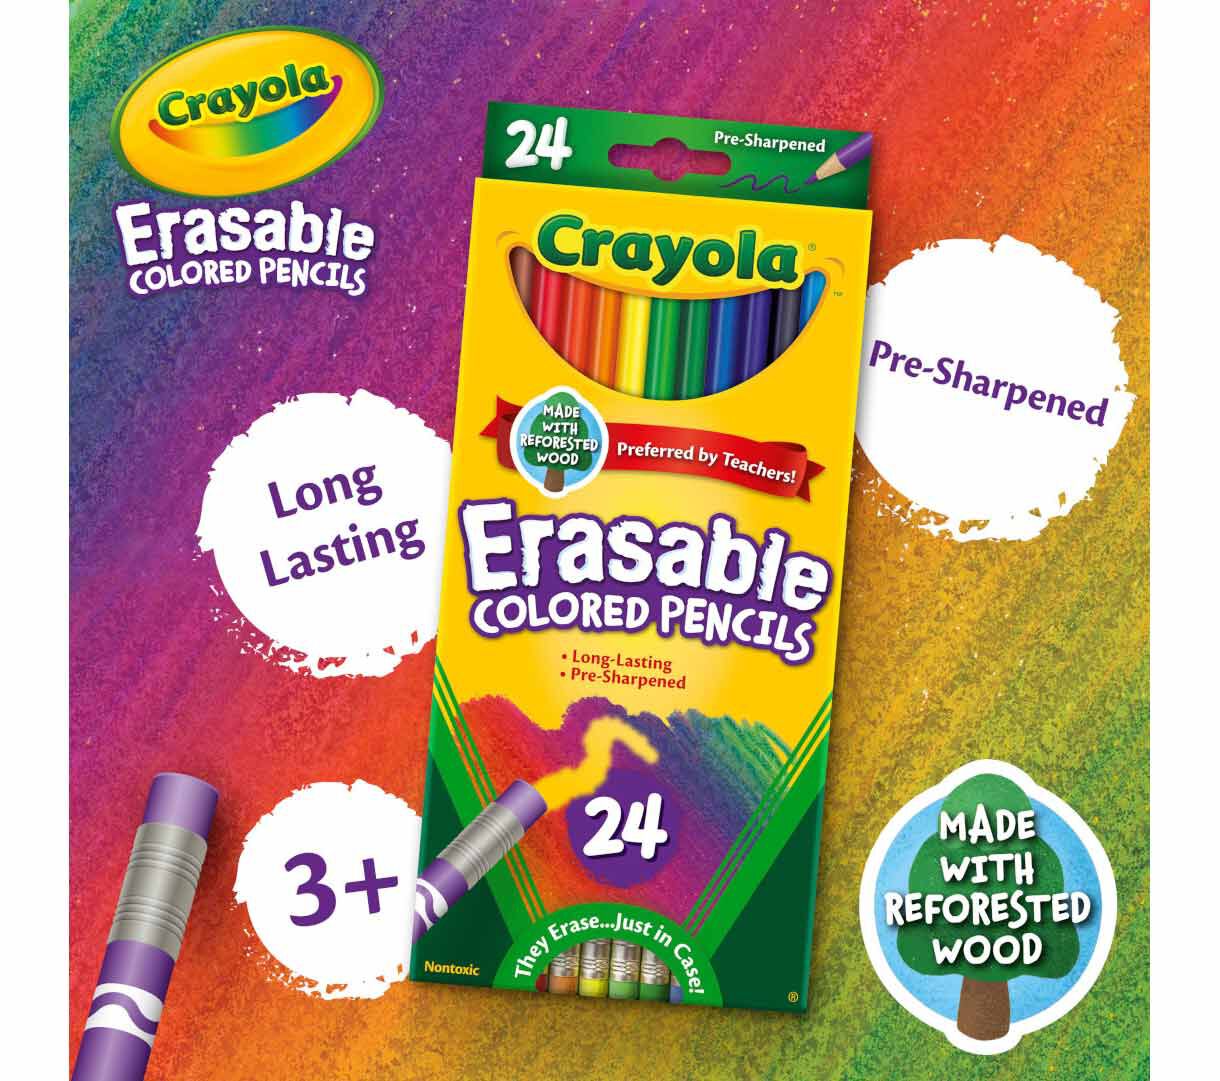 Crayola Erasable Colored Pencils, Art Tools, Adult Coloring, 24 Count